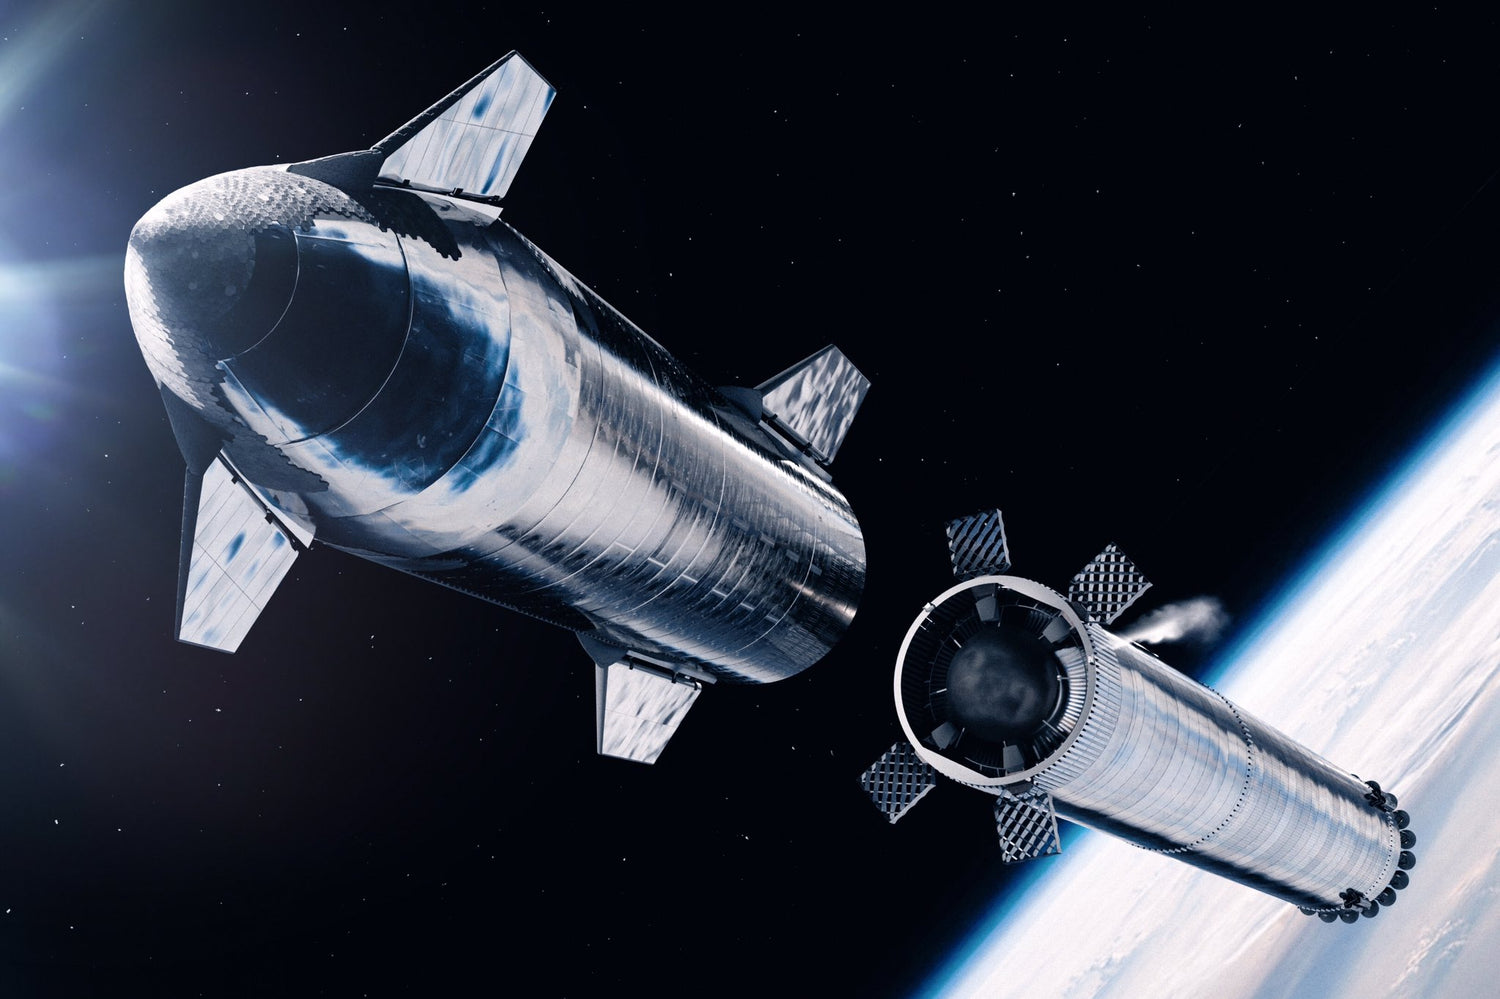 NASA Will Monitor SpaceX’s Starship ‘Starbrick’ Heatshield During Orbital Flight Test In 2022